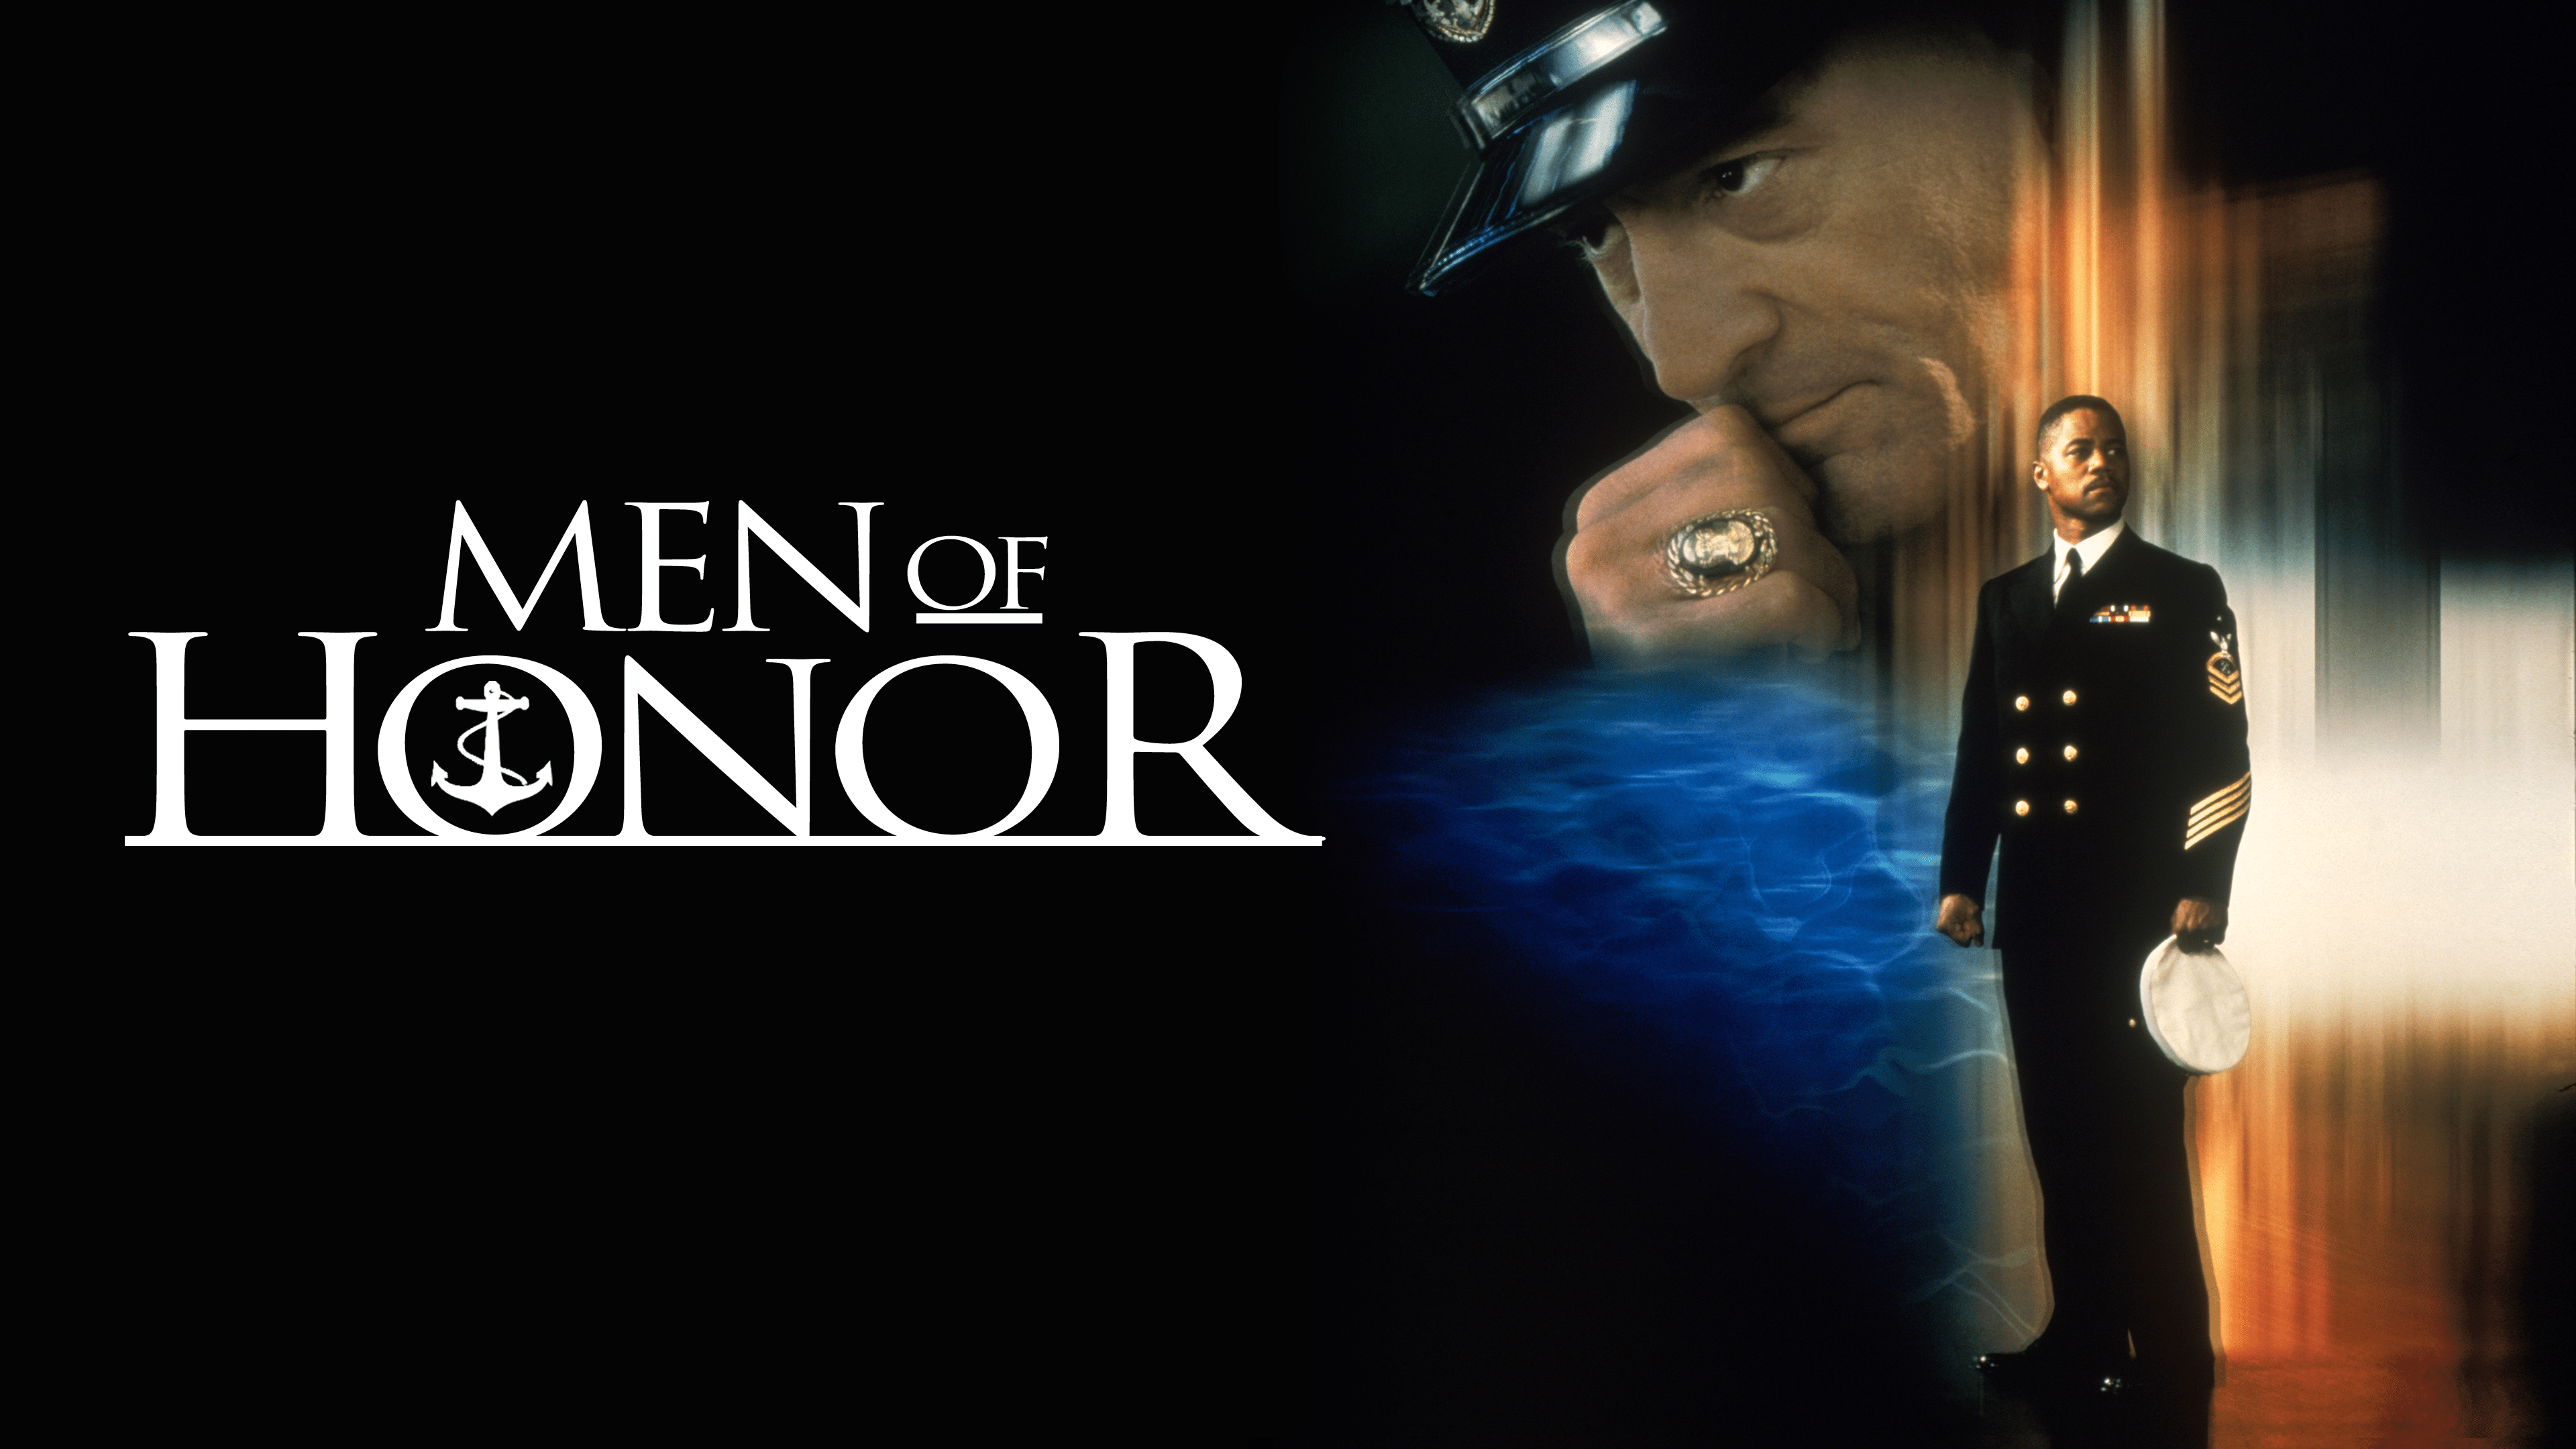 Men of Honor ansehen Disney+